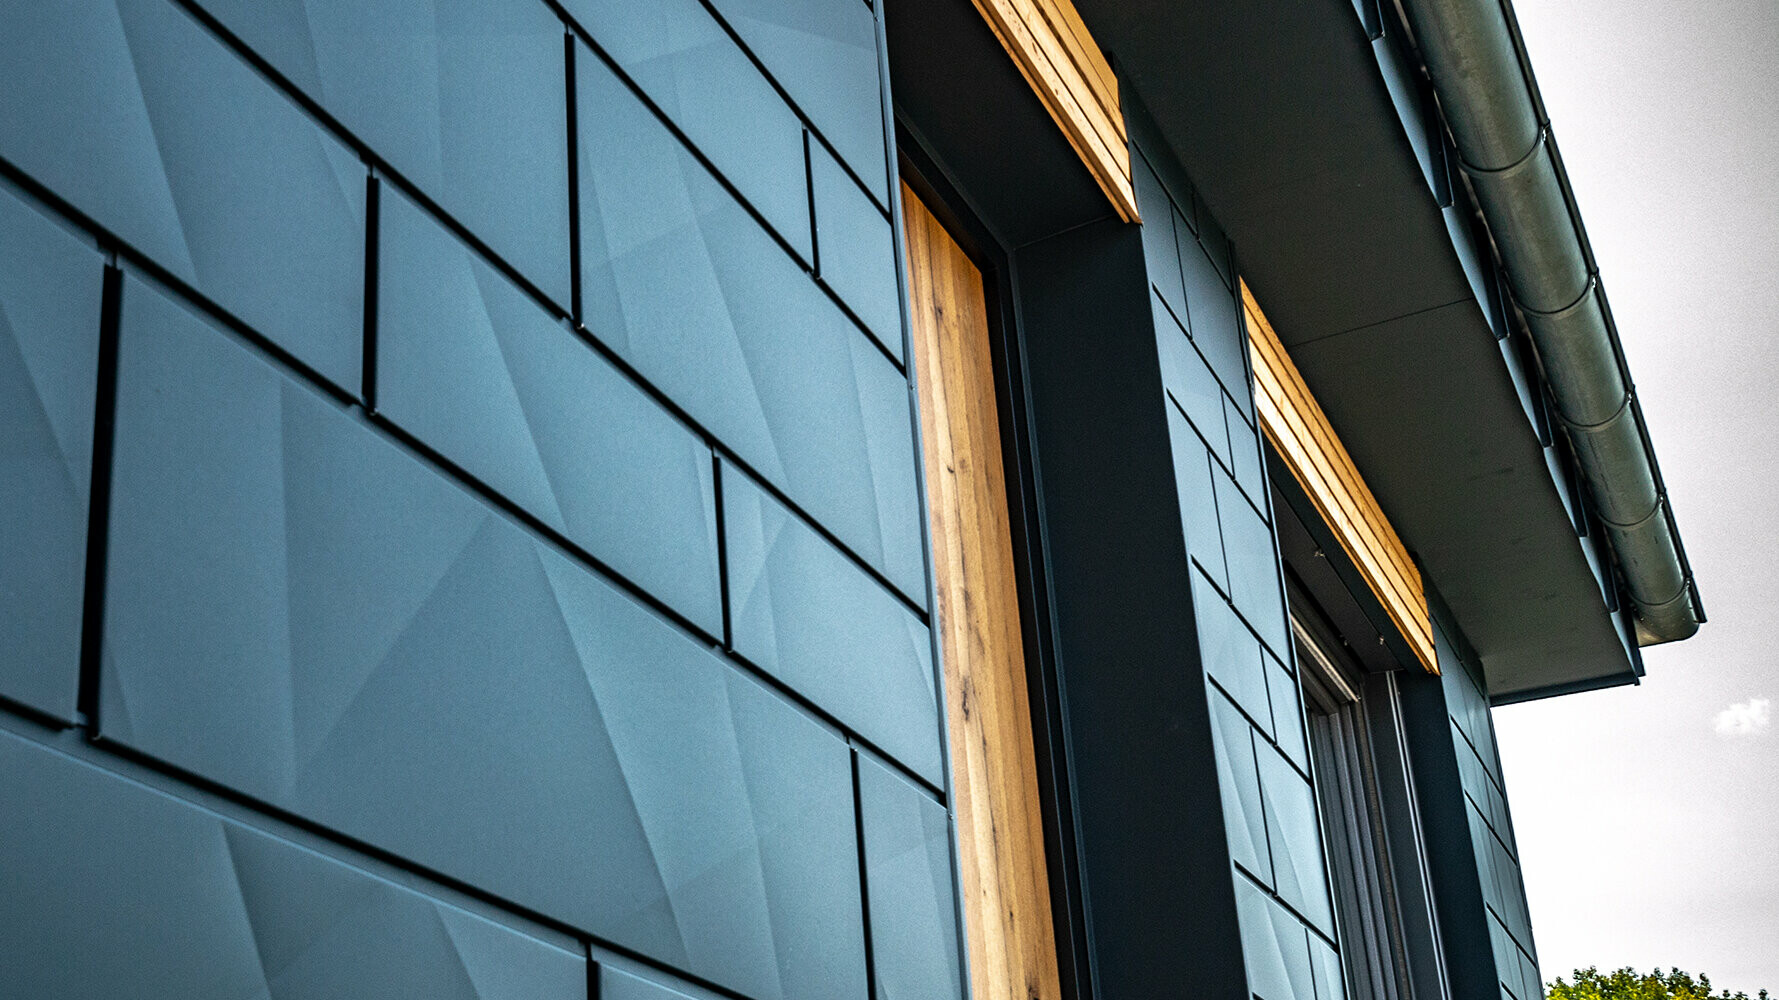 PREFA Fassadenpaneele mit geknickter Optik; PREFA Aluminium Siding.X in Anthrazit mit Holzfassade kombiniert.